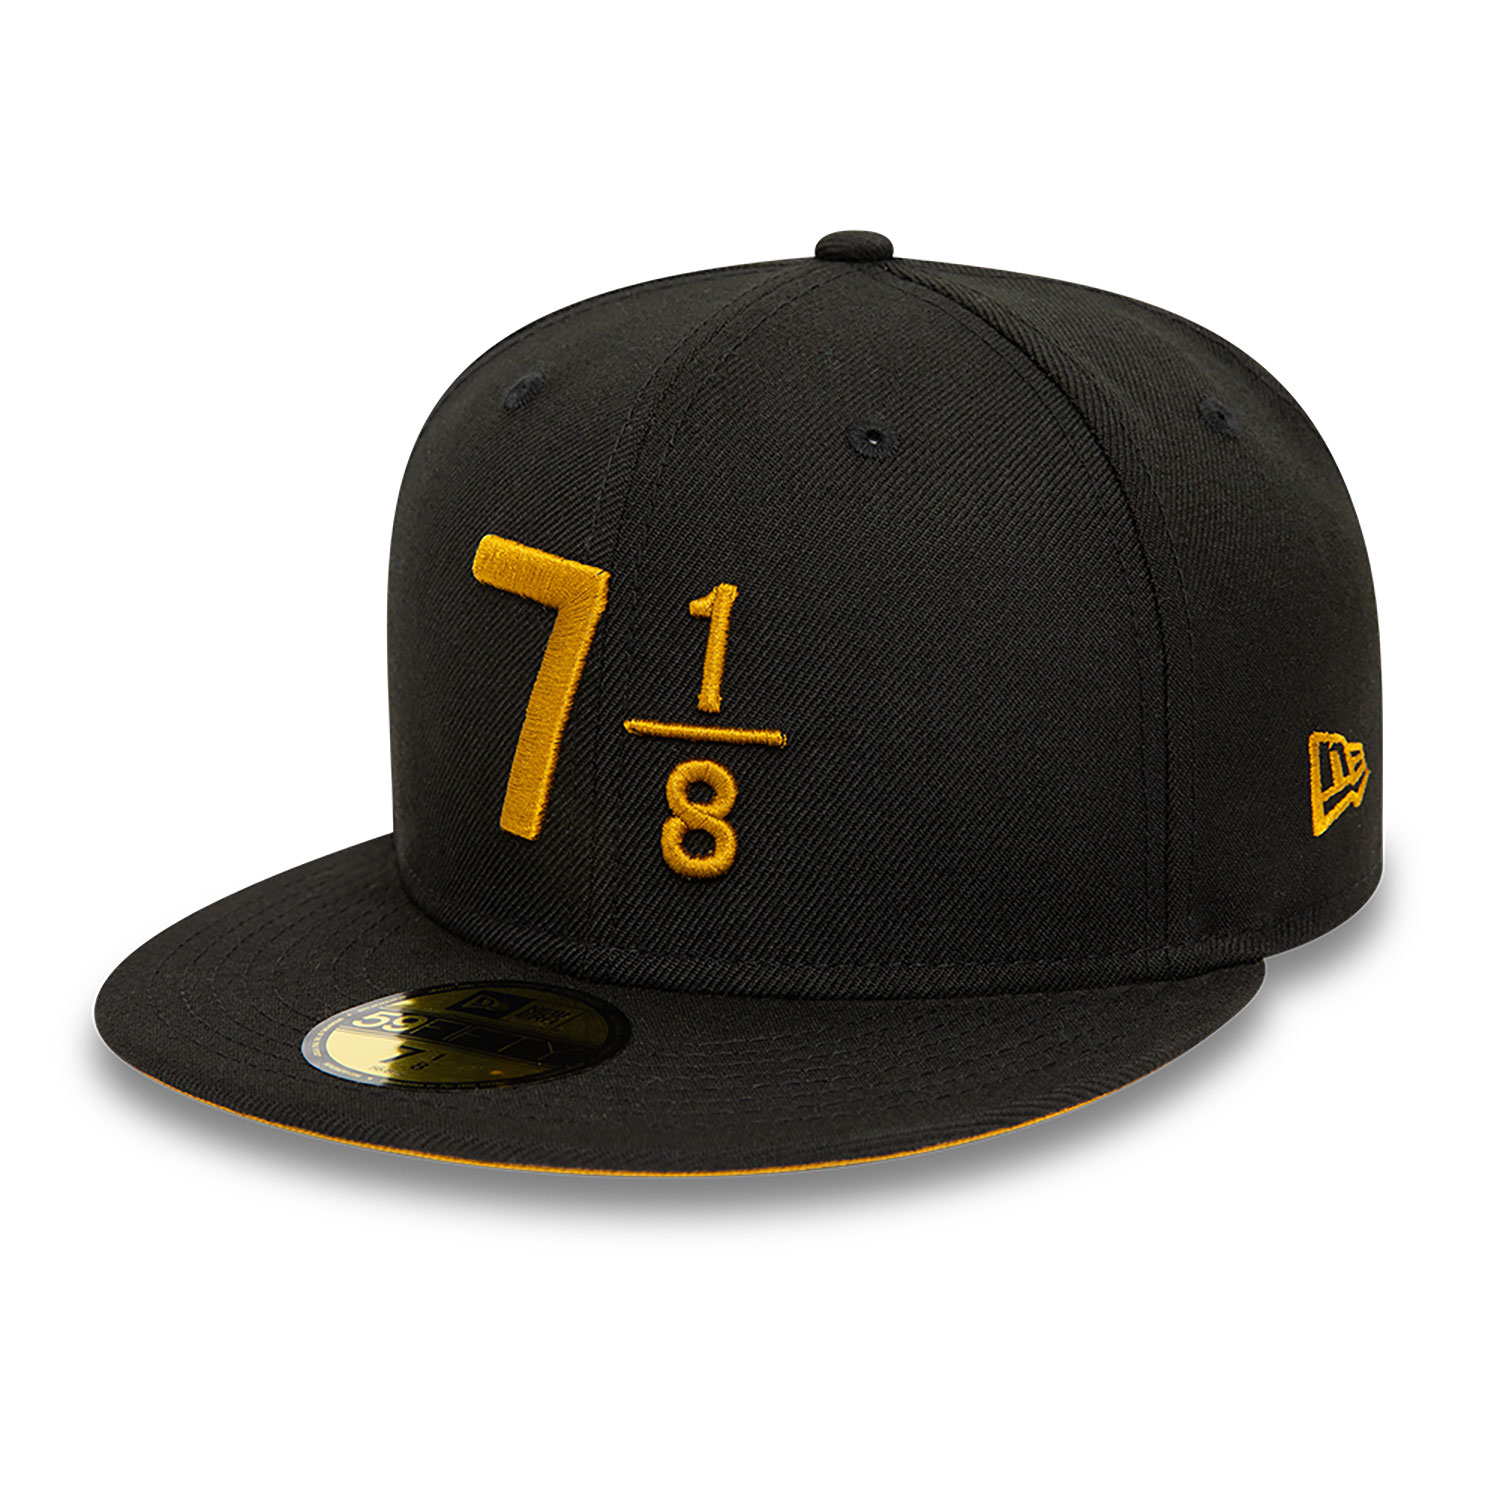 Washington Bullets Fitted Size 6 7/8 New Era Hat. (6/20/22)